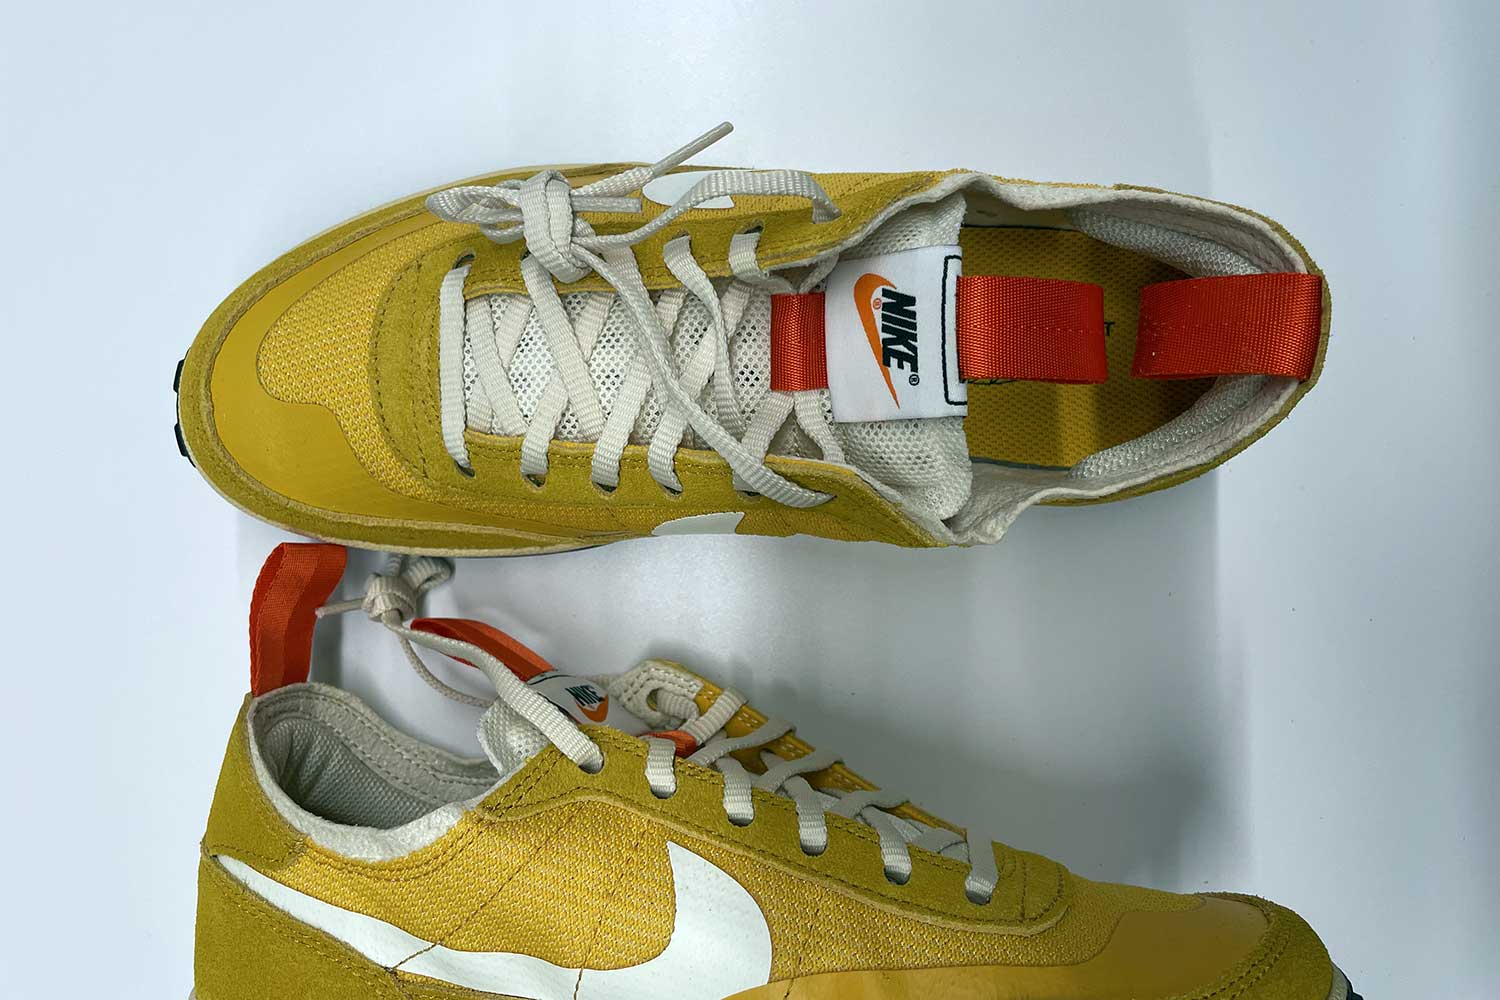 Tom Sachs x NikeCraft General Purpose Shoe Yellow First Look